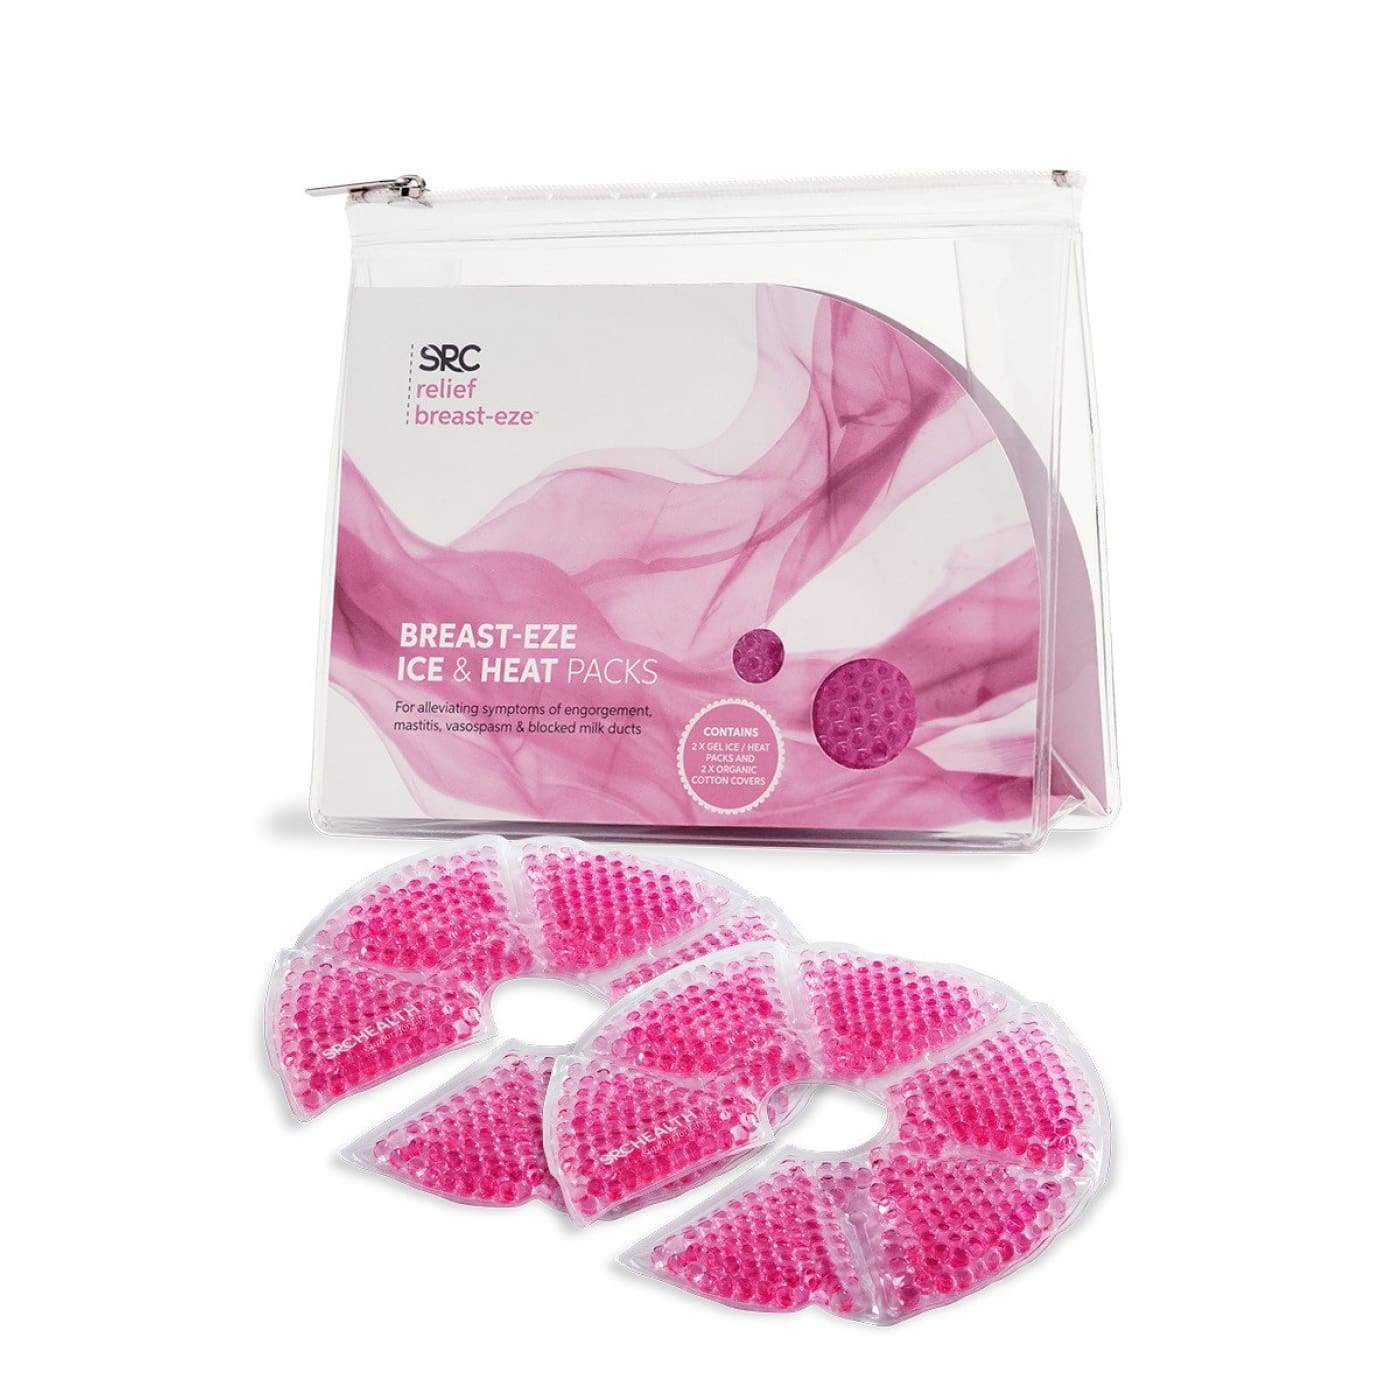 SRC Breast-Eze Ice & Heat Packs with Organic Gloves 2PK - NURSING & FEEDING - BREAST FEEDING AIDS/STORAGE